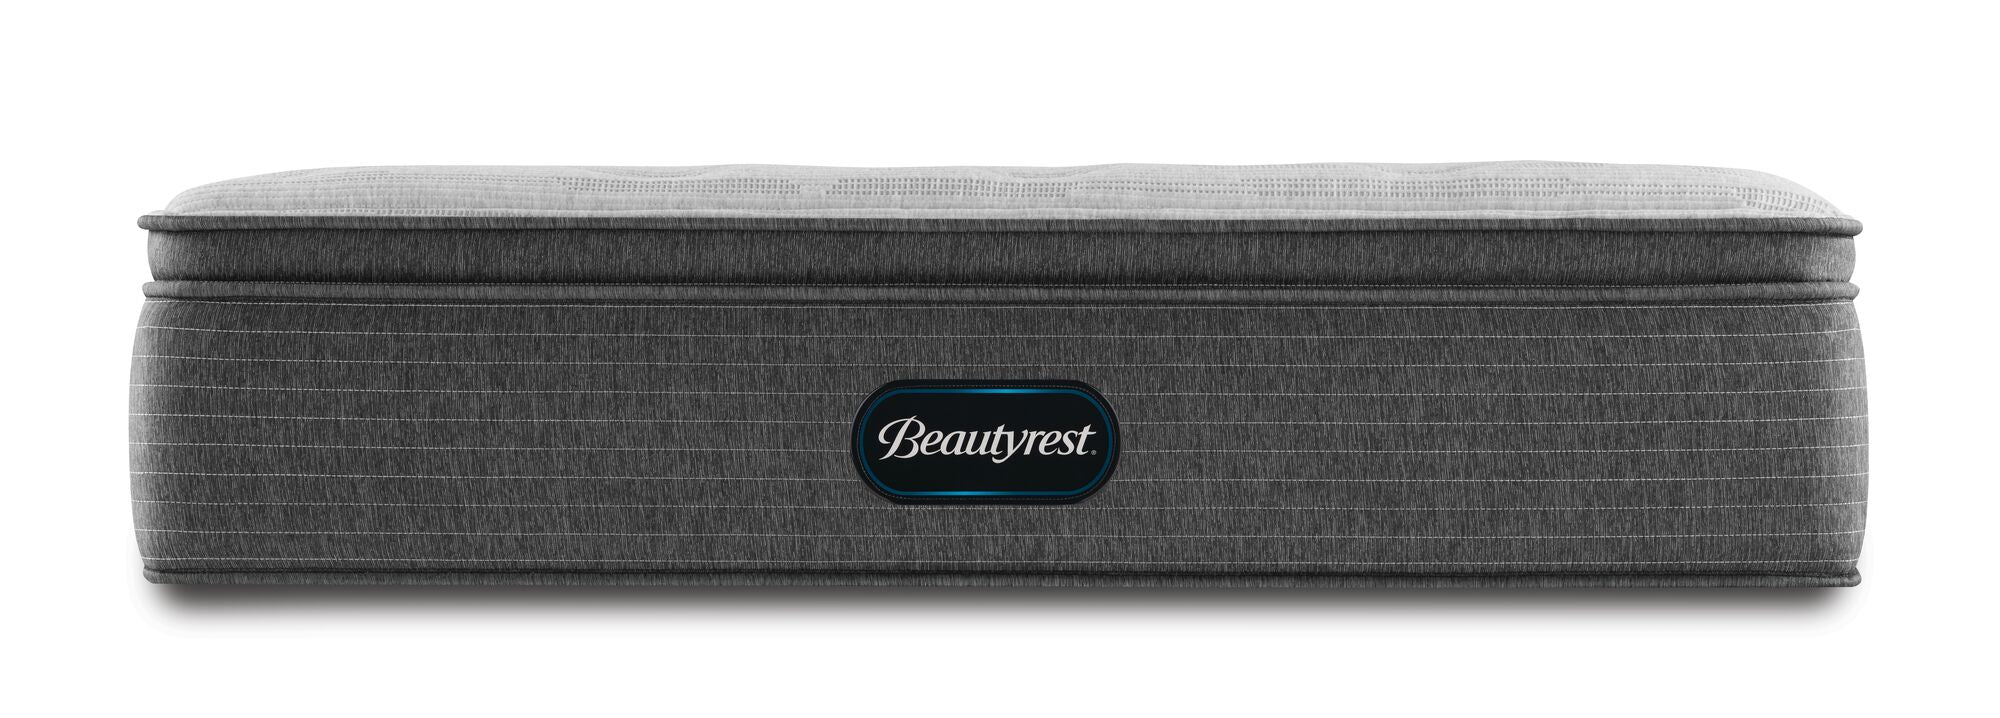 Beautyrest Select Plush Pillowtop